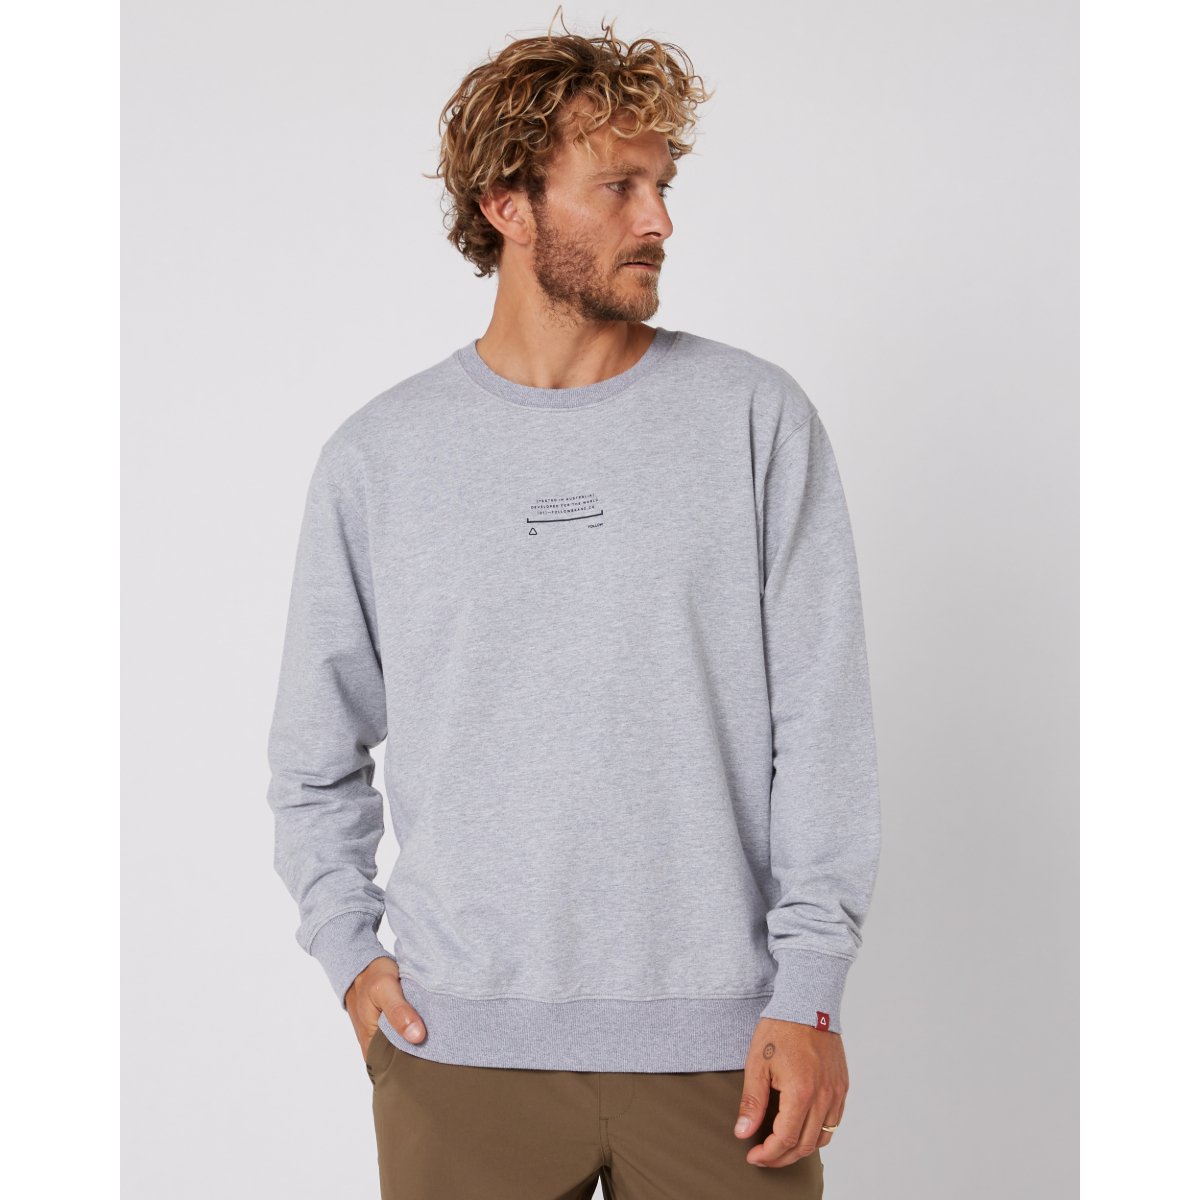 Follow Couch Crew Sweatshirt in Grey Heather - BoardCo